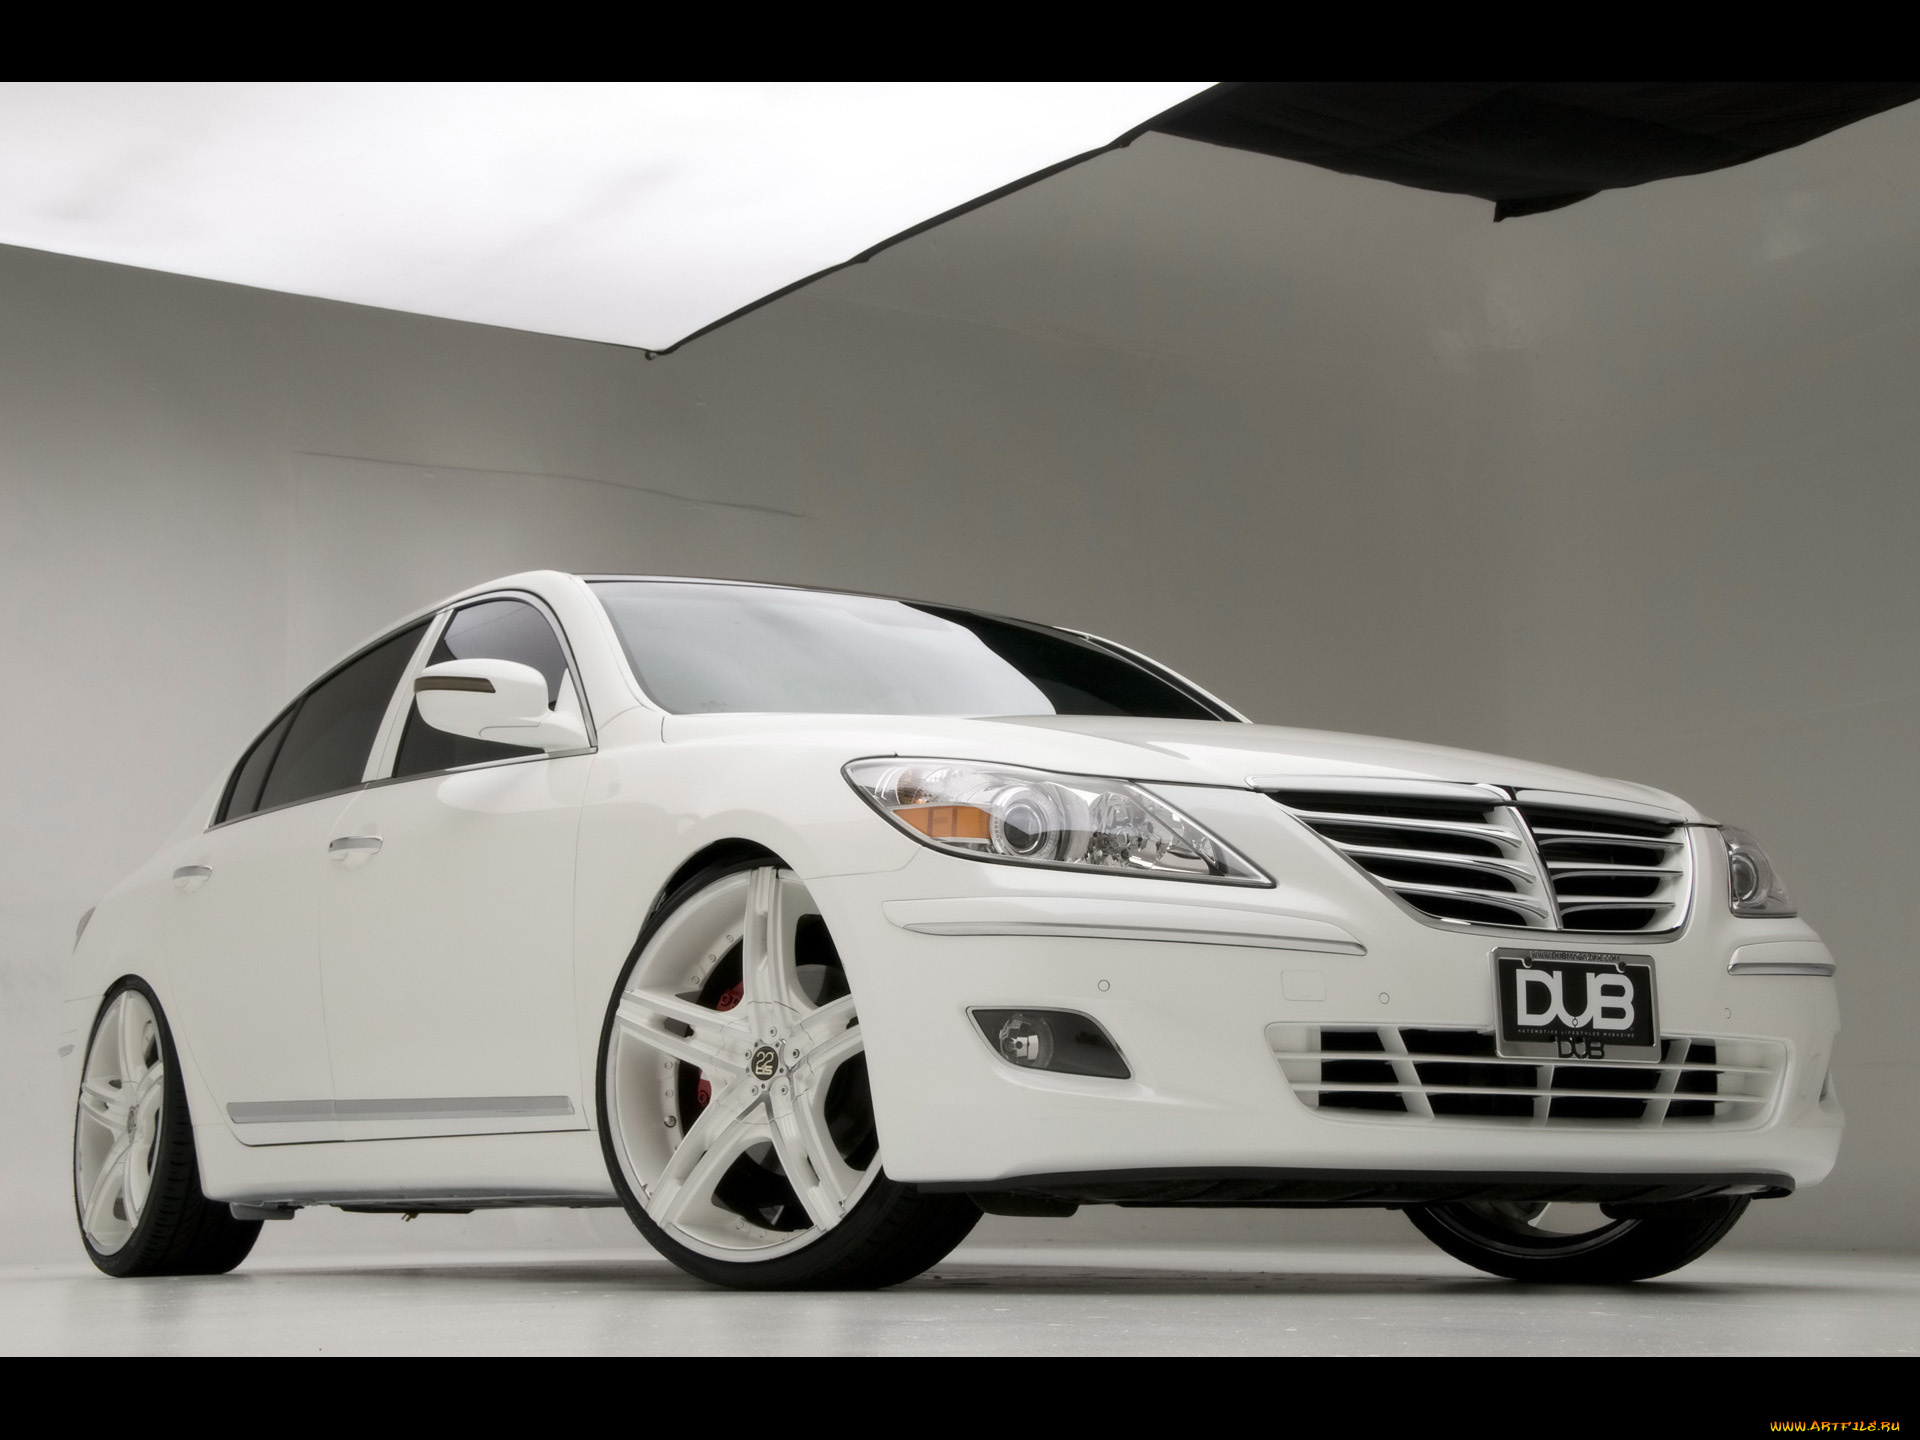 2009, hyundai, dub, magazine, genesis, sedan, white, автомобили